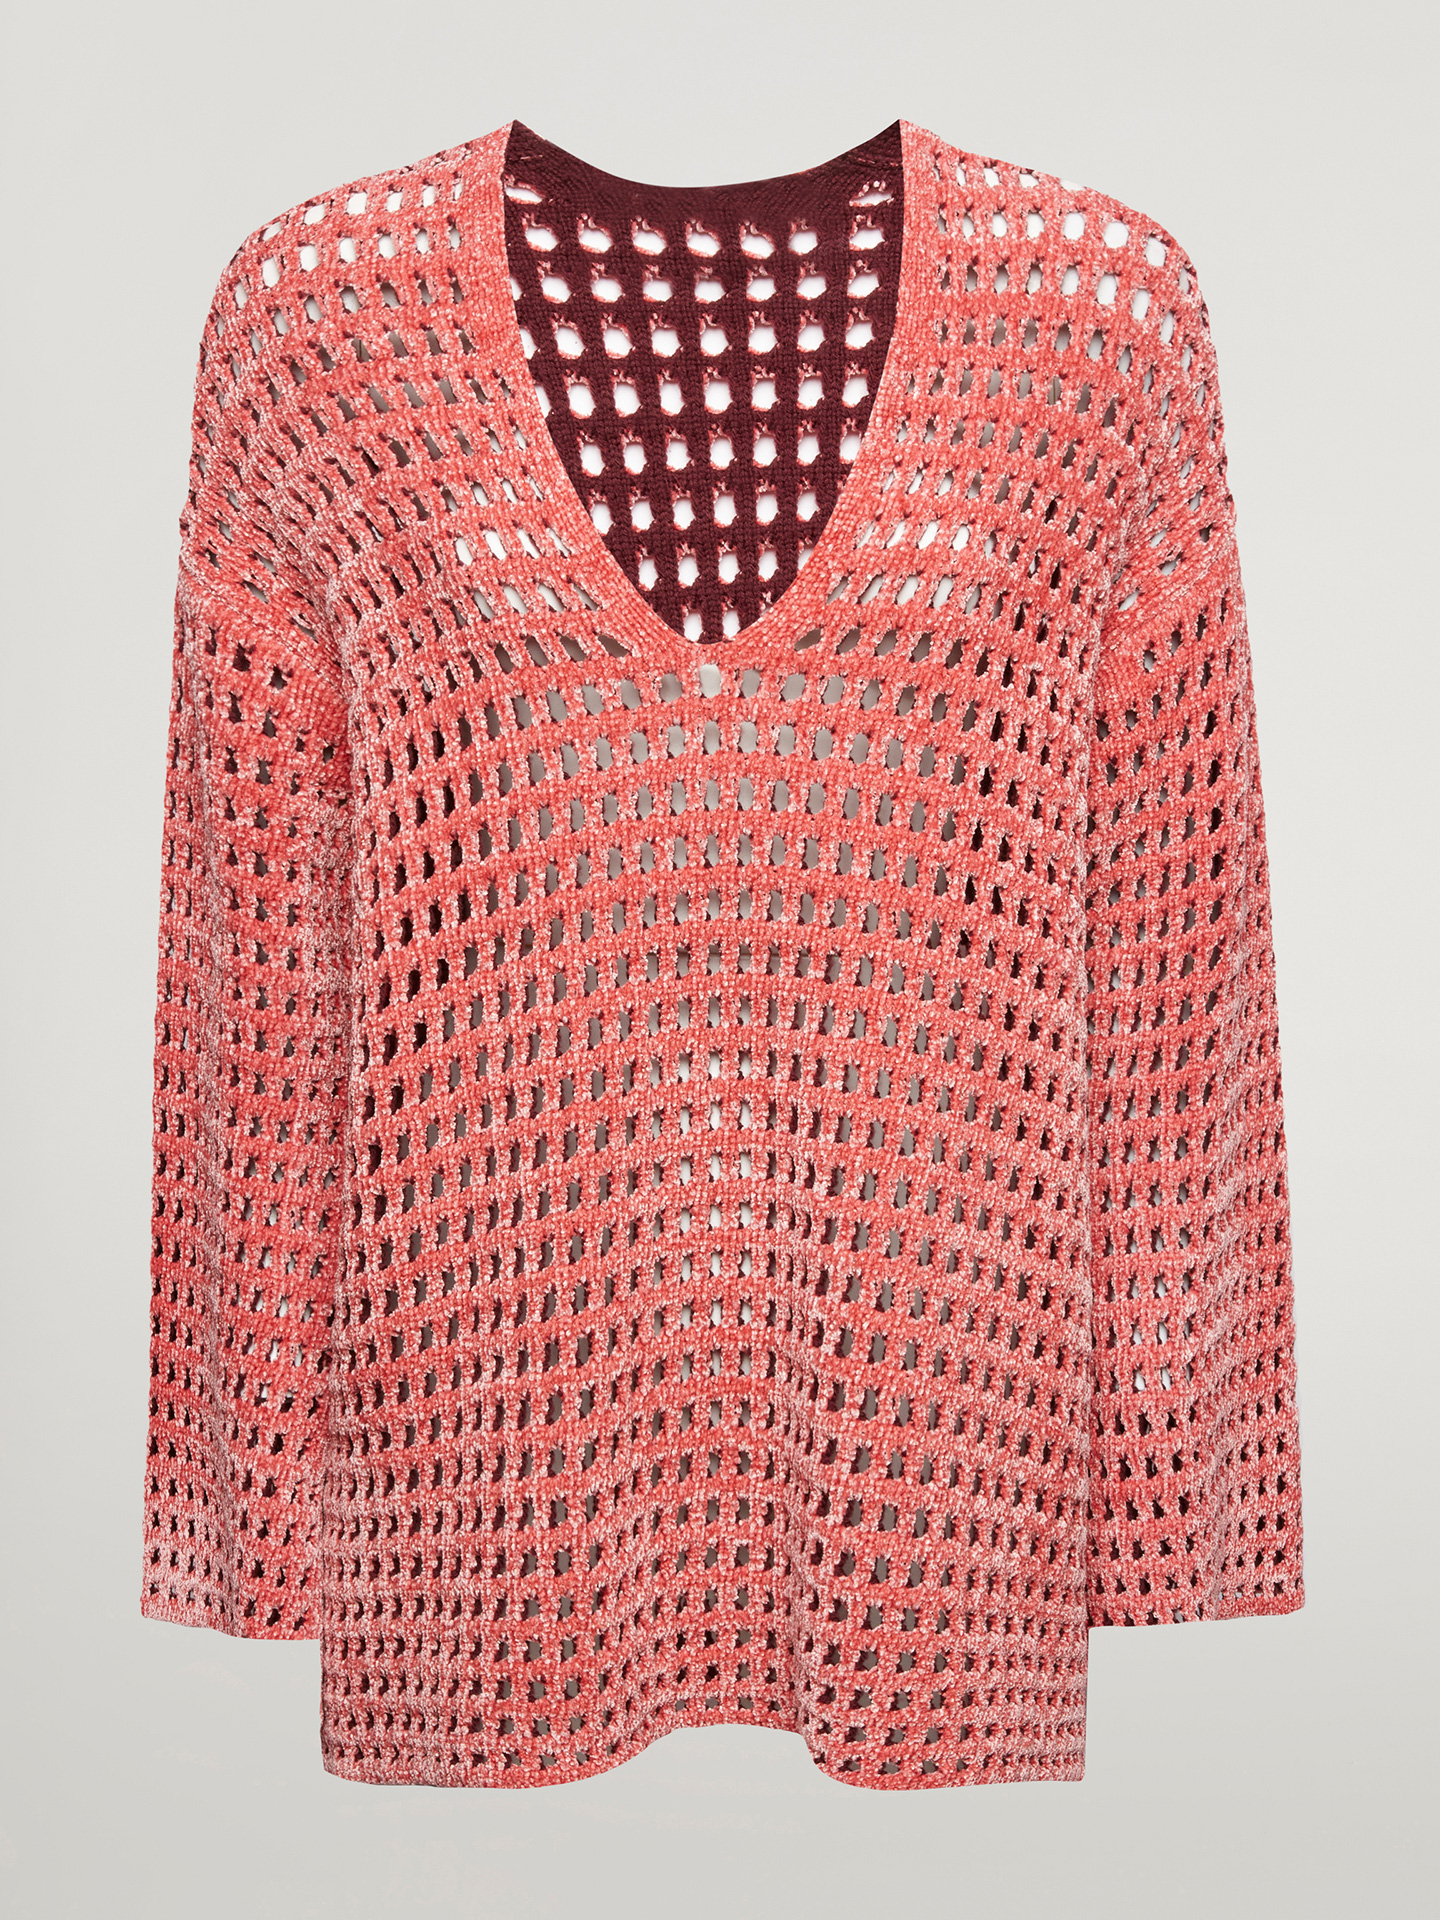 Wolford - Knit Net Top Long Sleeves, Frau, brandied apricot, Größe: S günstig online kaufen